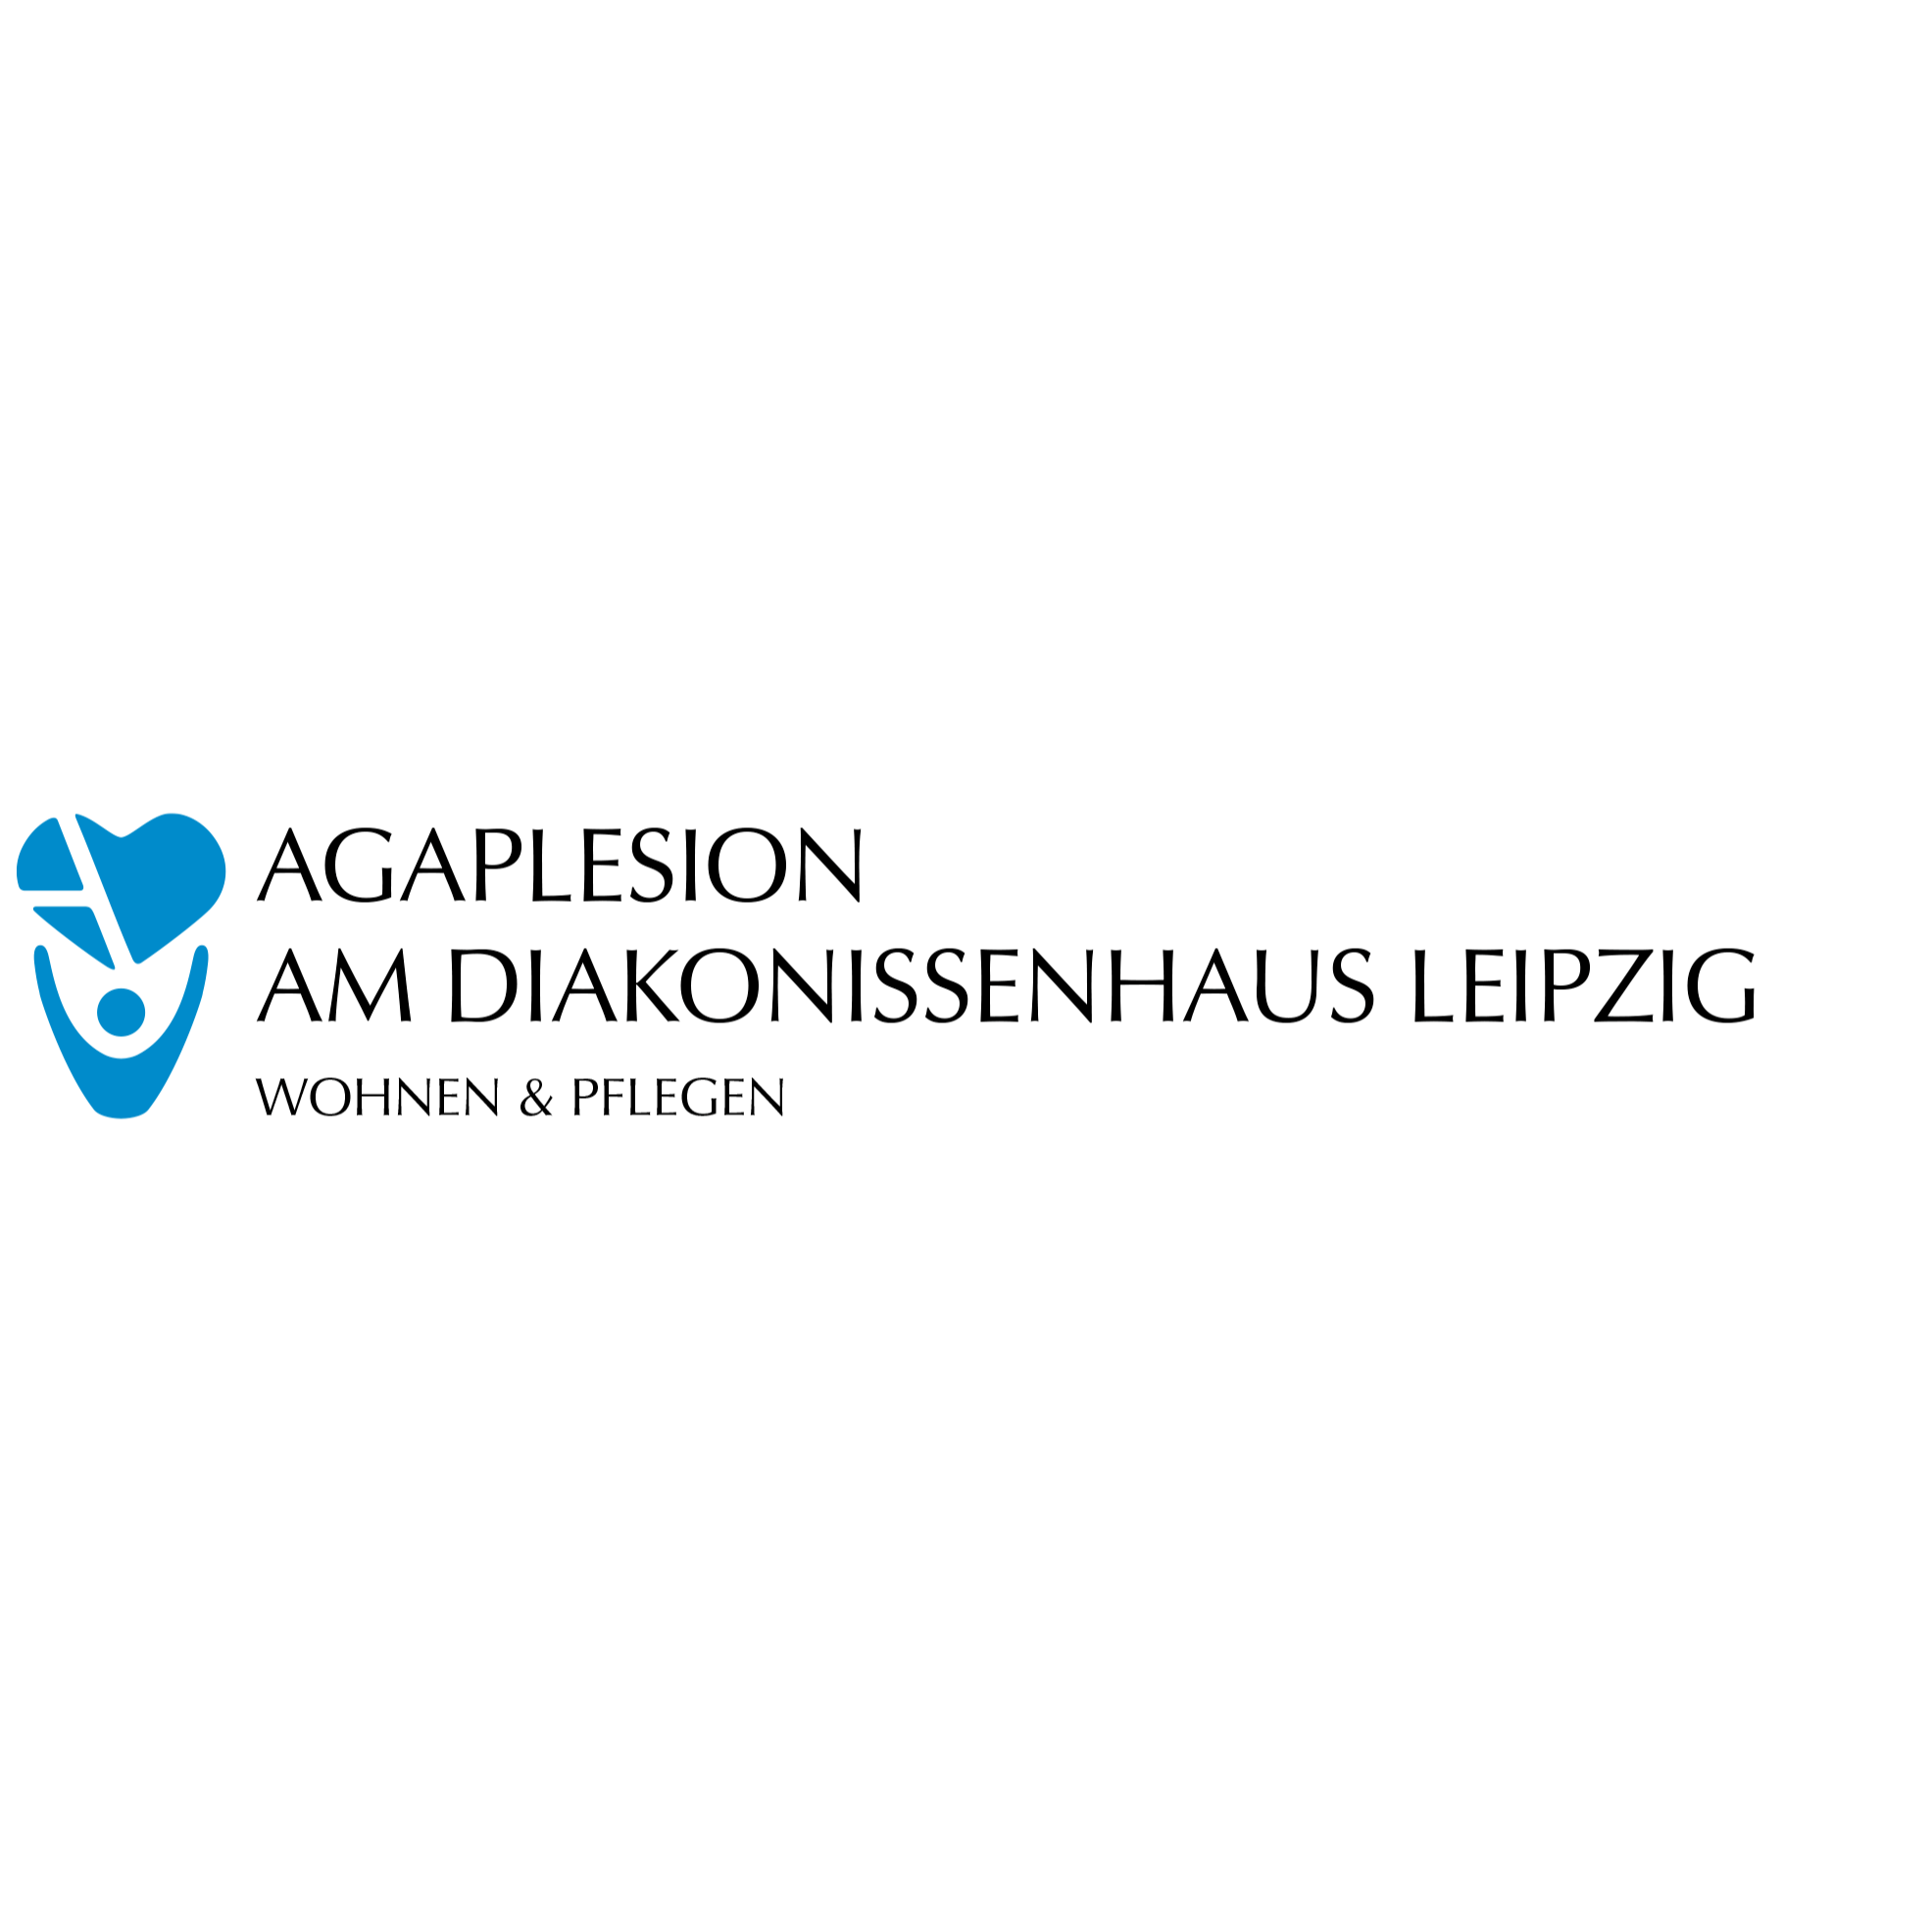 AGAPLESION AM DIAKONISSENHAUS LEIPZIG in Leipzig - Logo